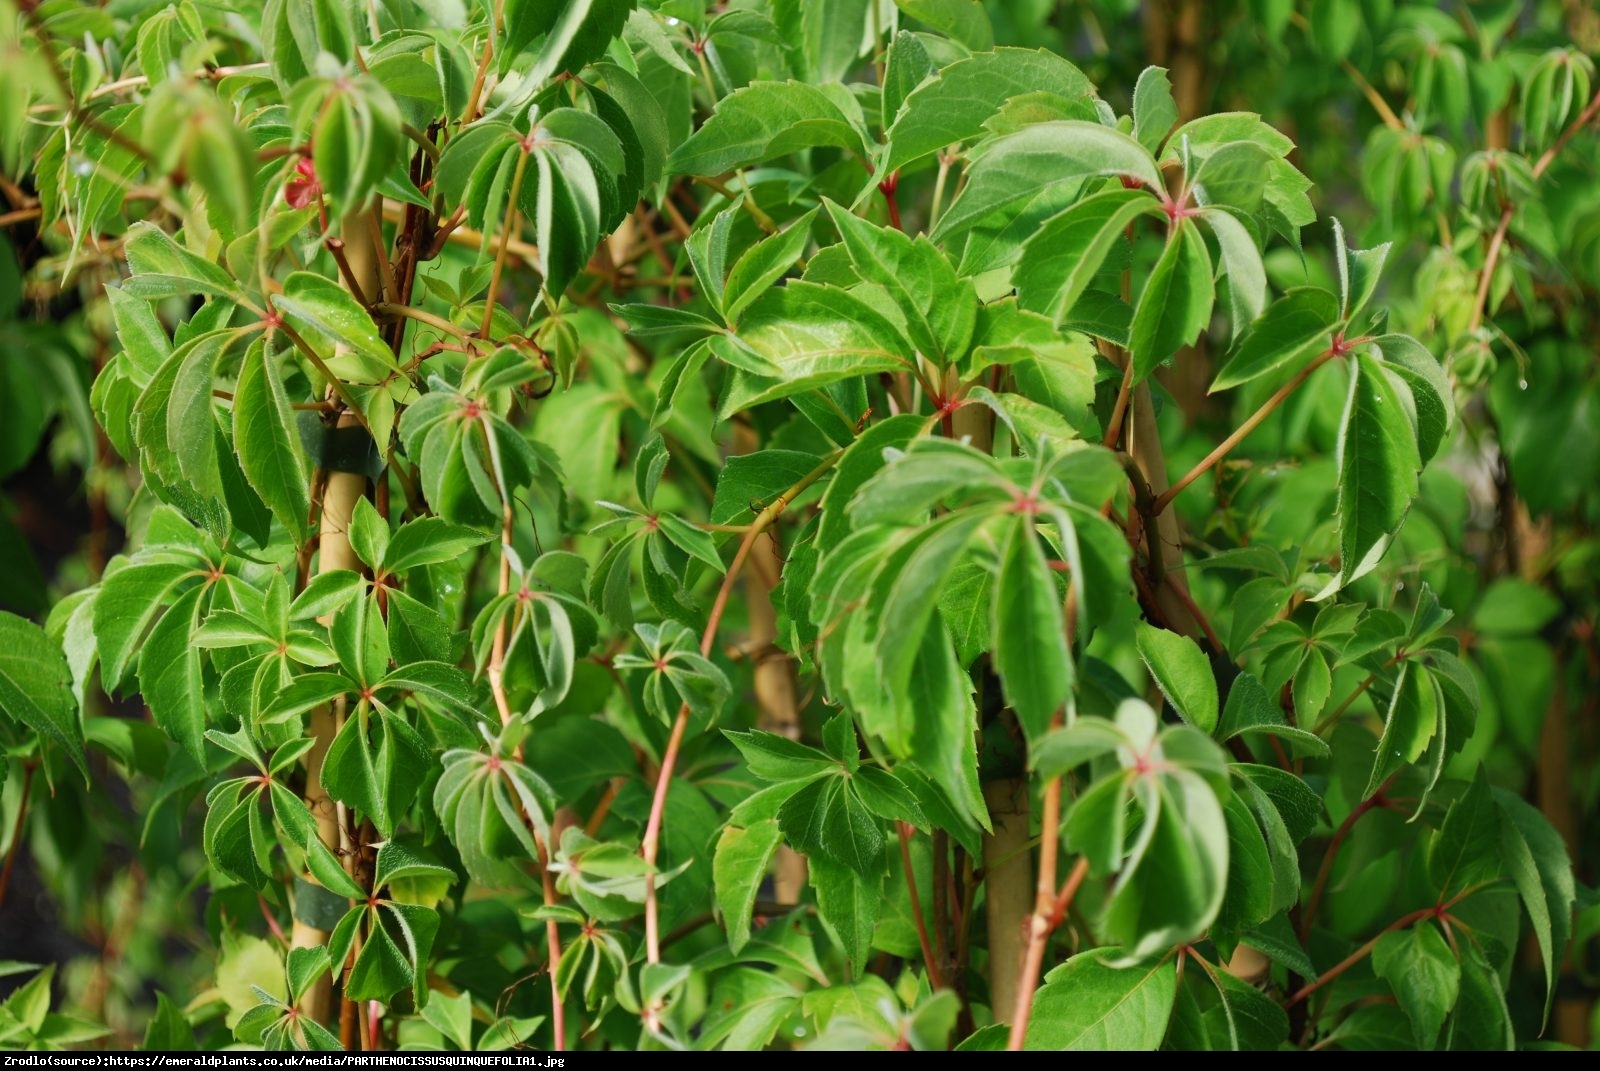 Winobluszcz pieciolistkowy - Parthenocissus quinquefolia